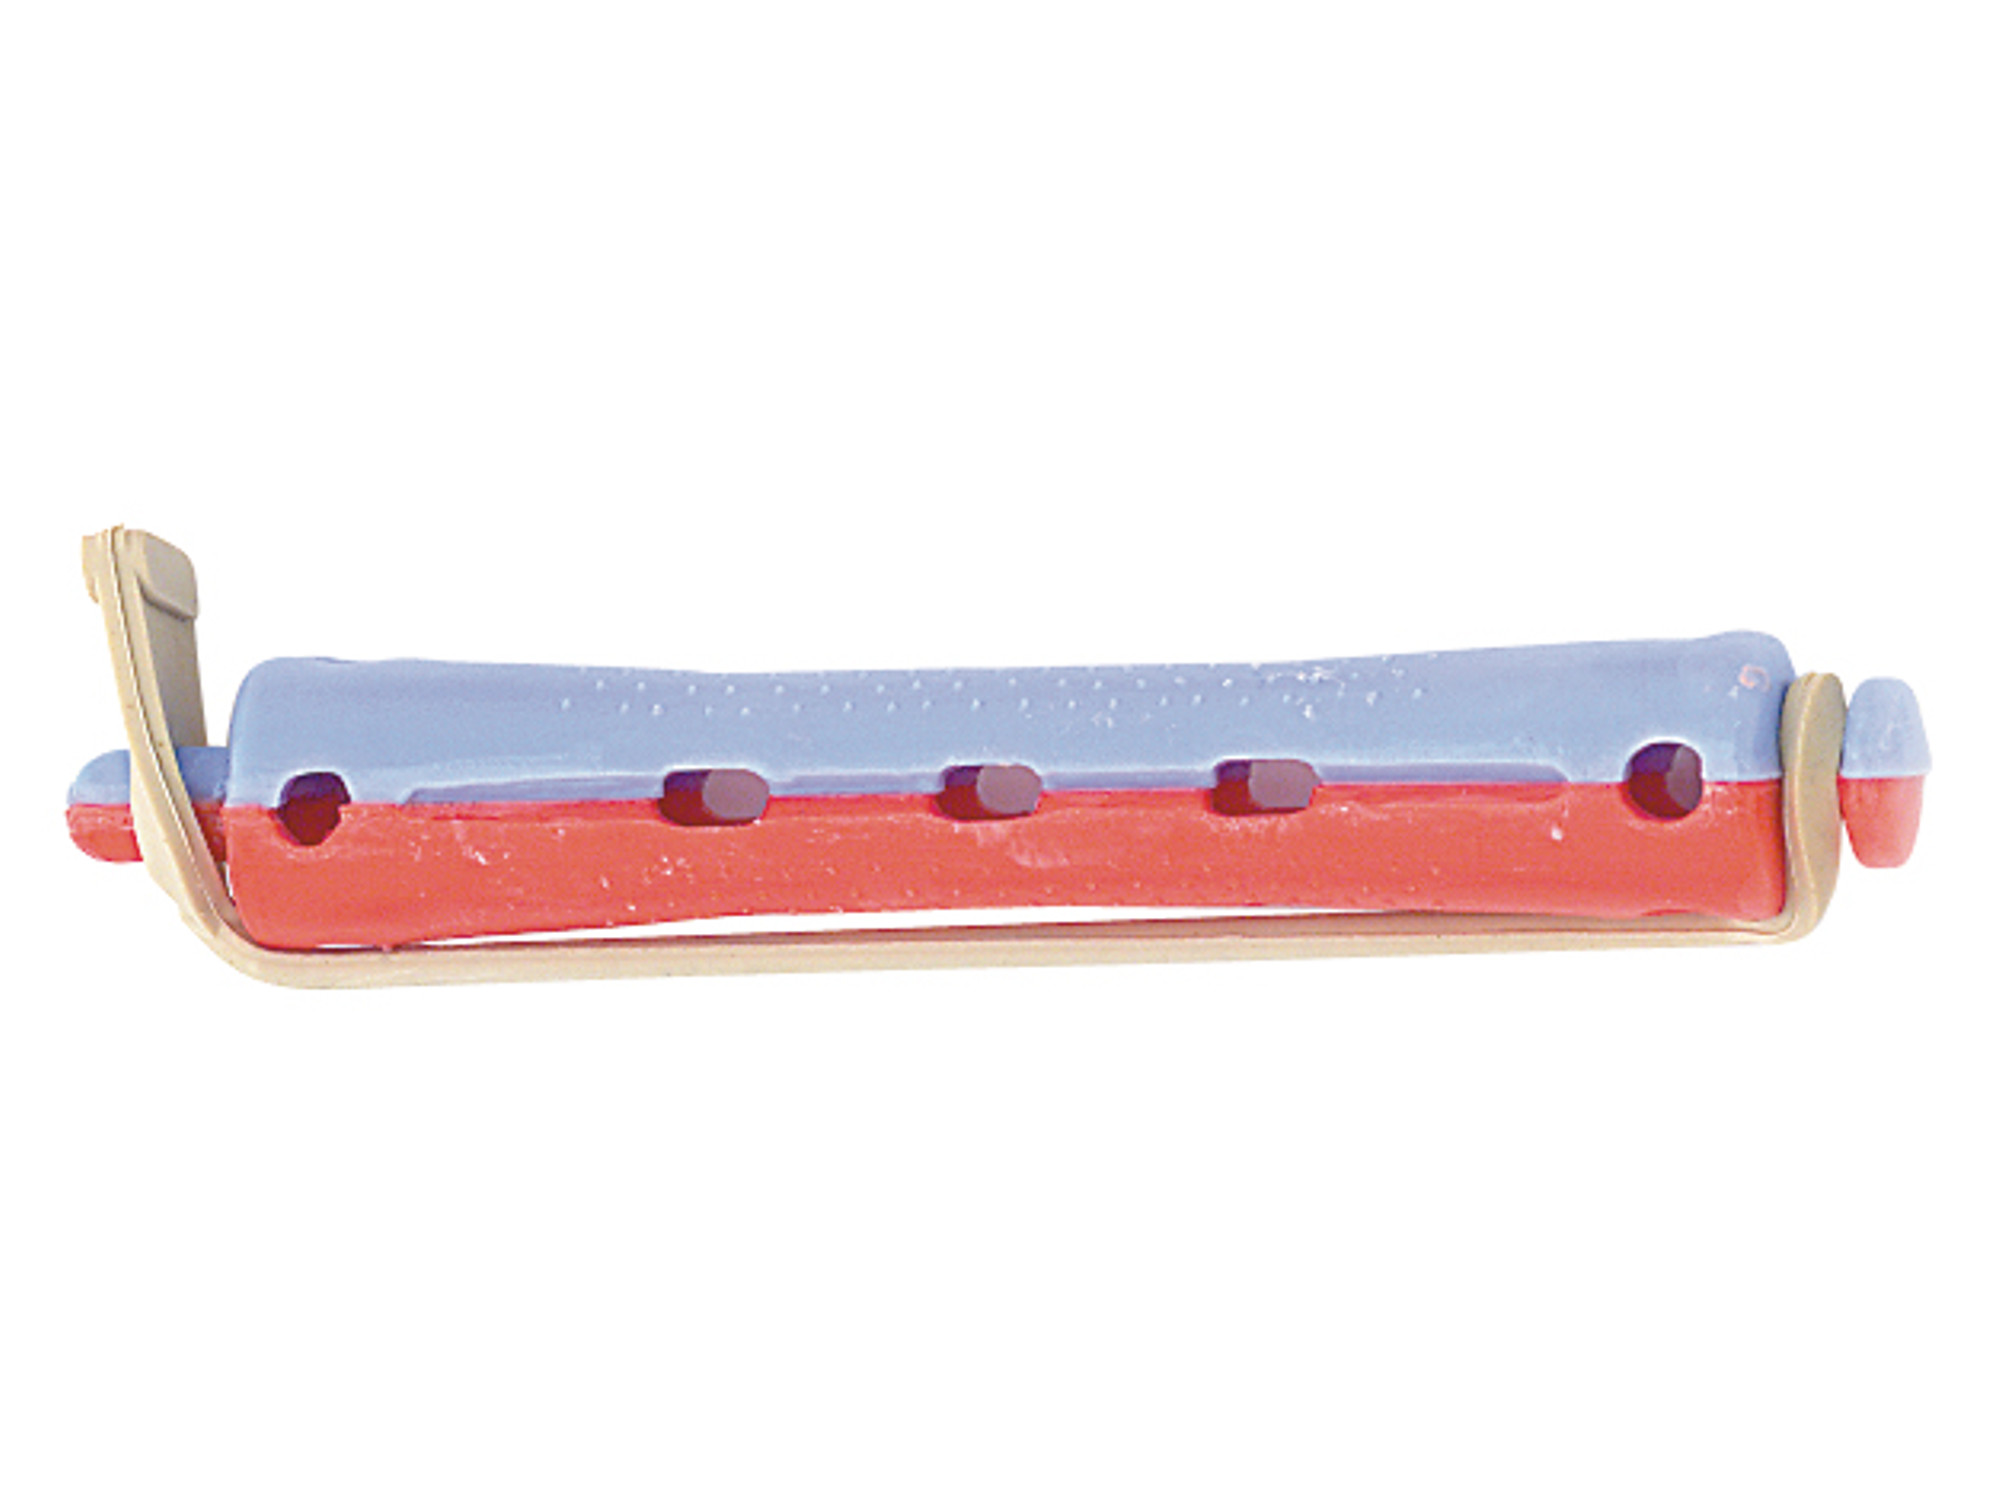 Plastové natáčky na trvalou Sibel pr.11mm, 12 ks - modro-červené (4500239)